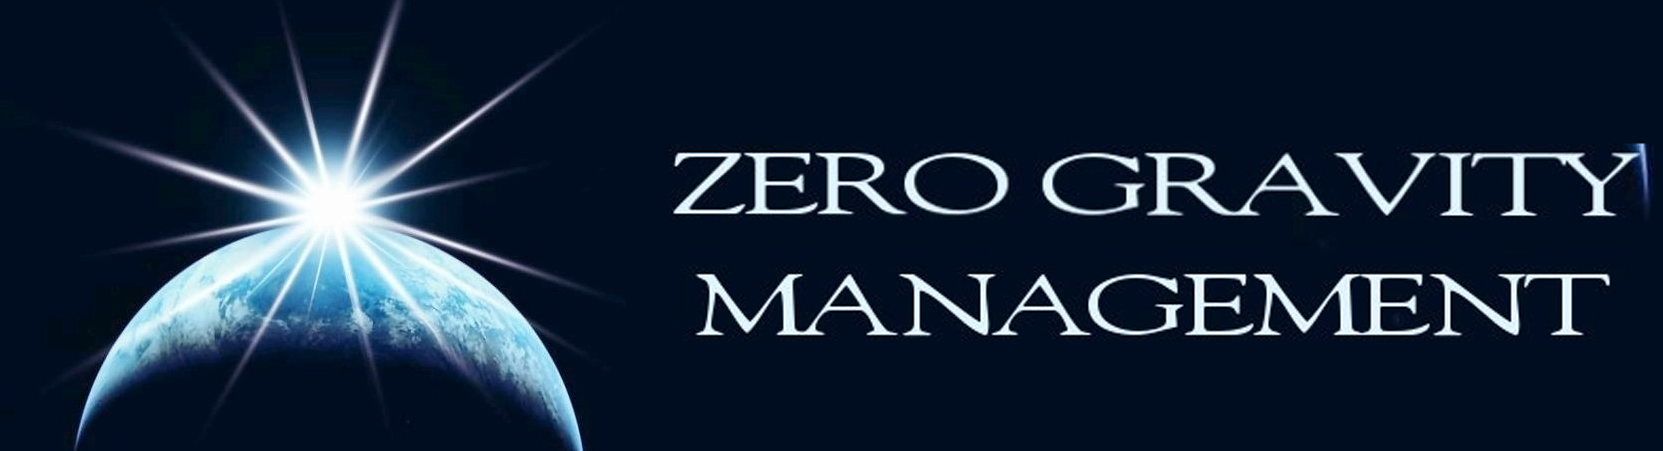 zero gravity management-logo